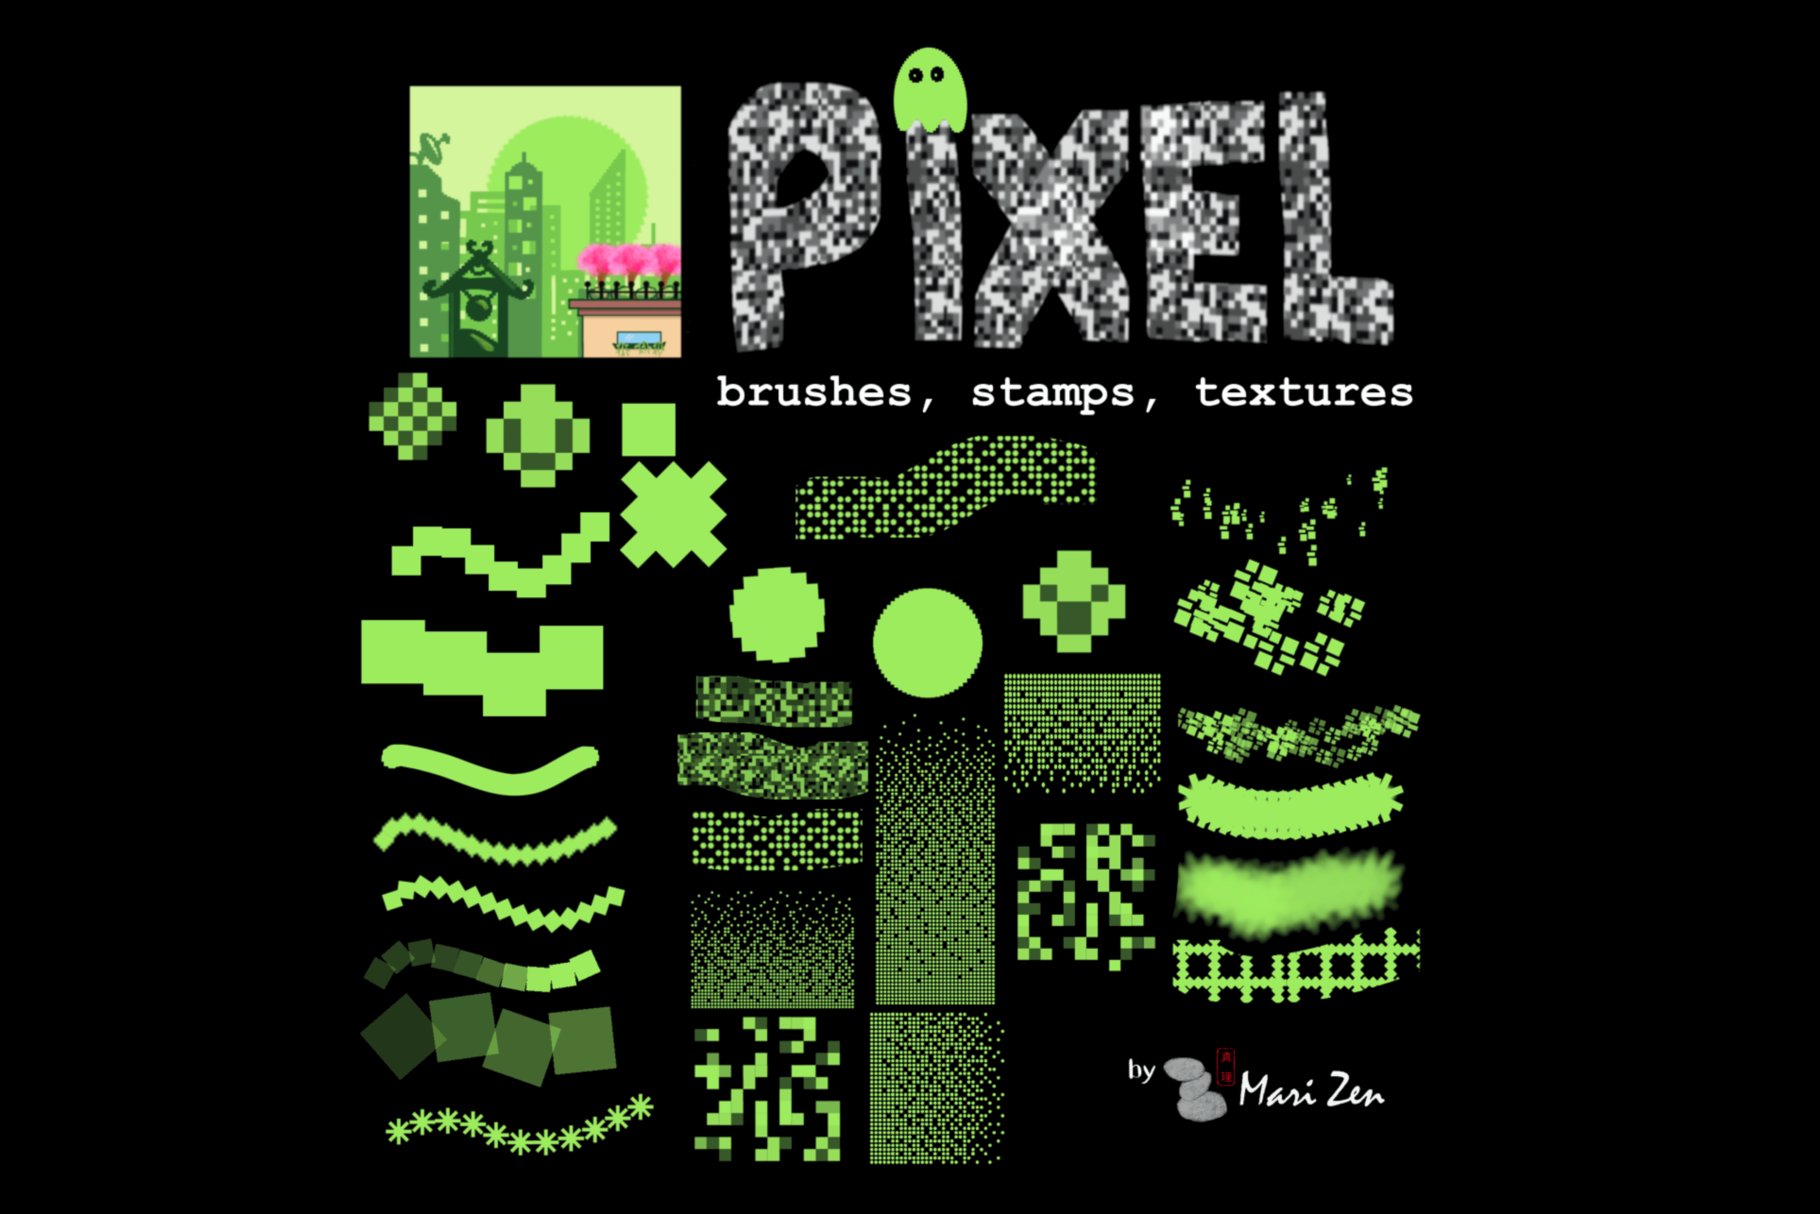 pixel art procreate brush free